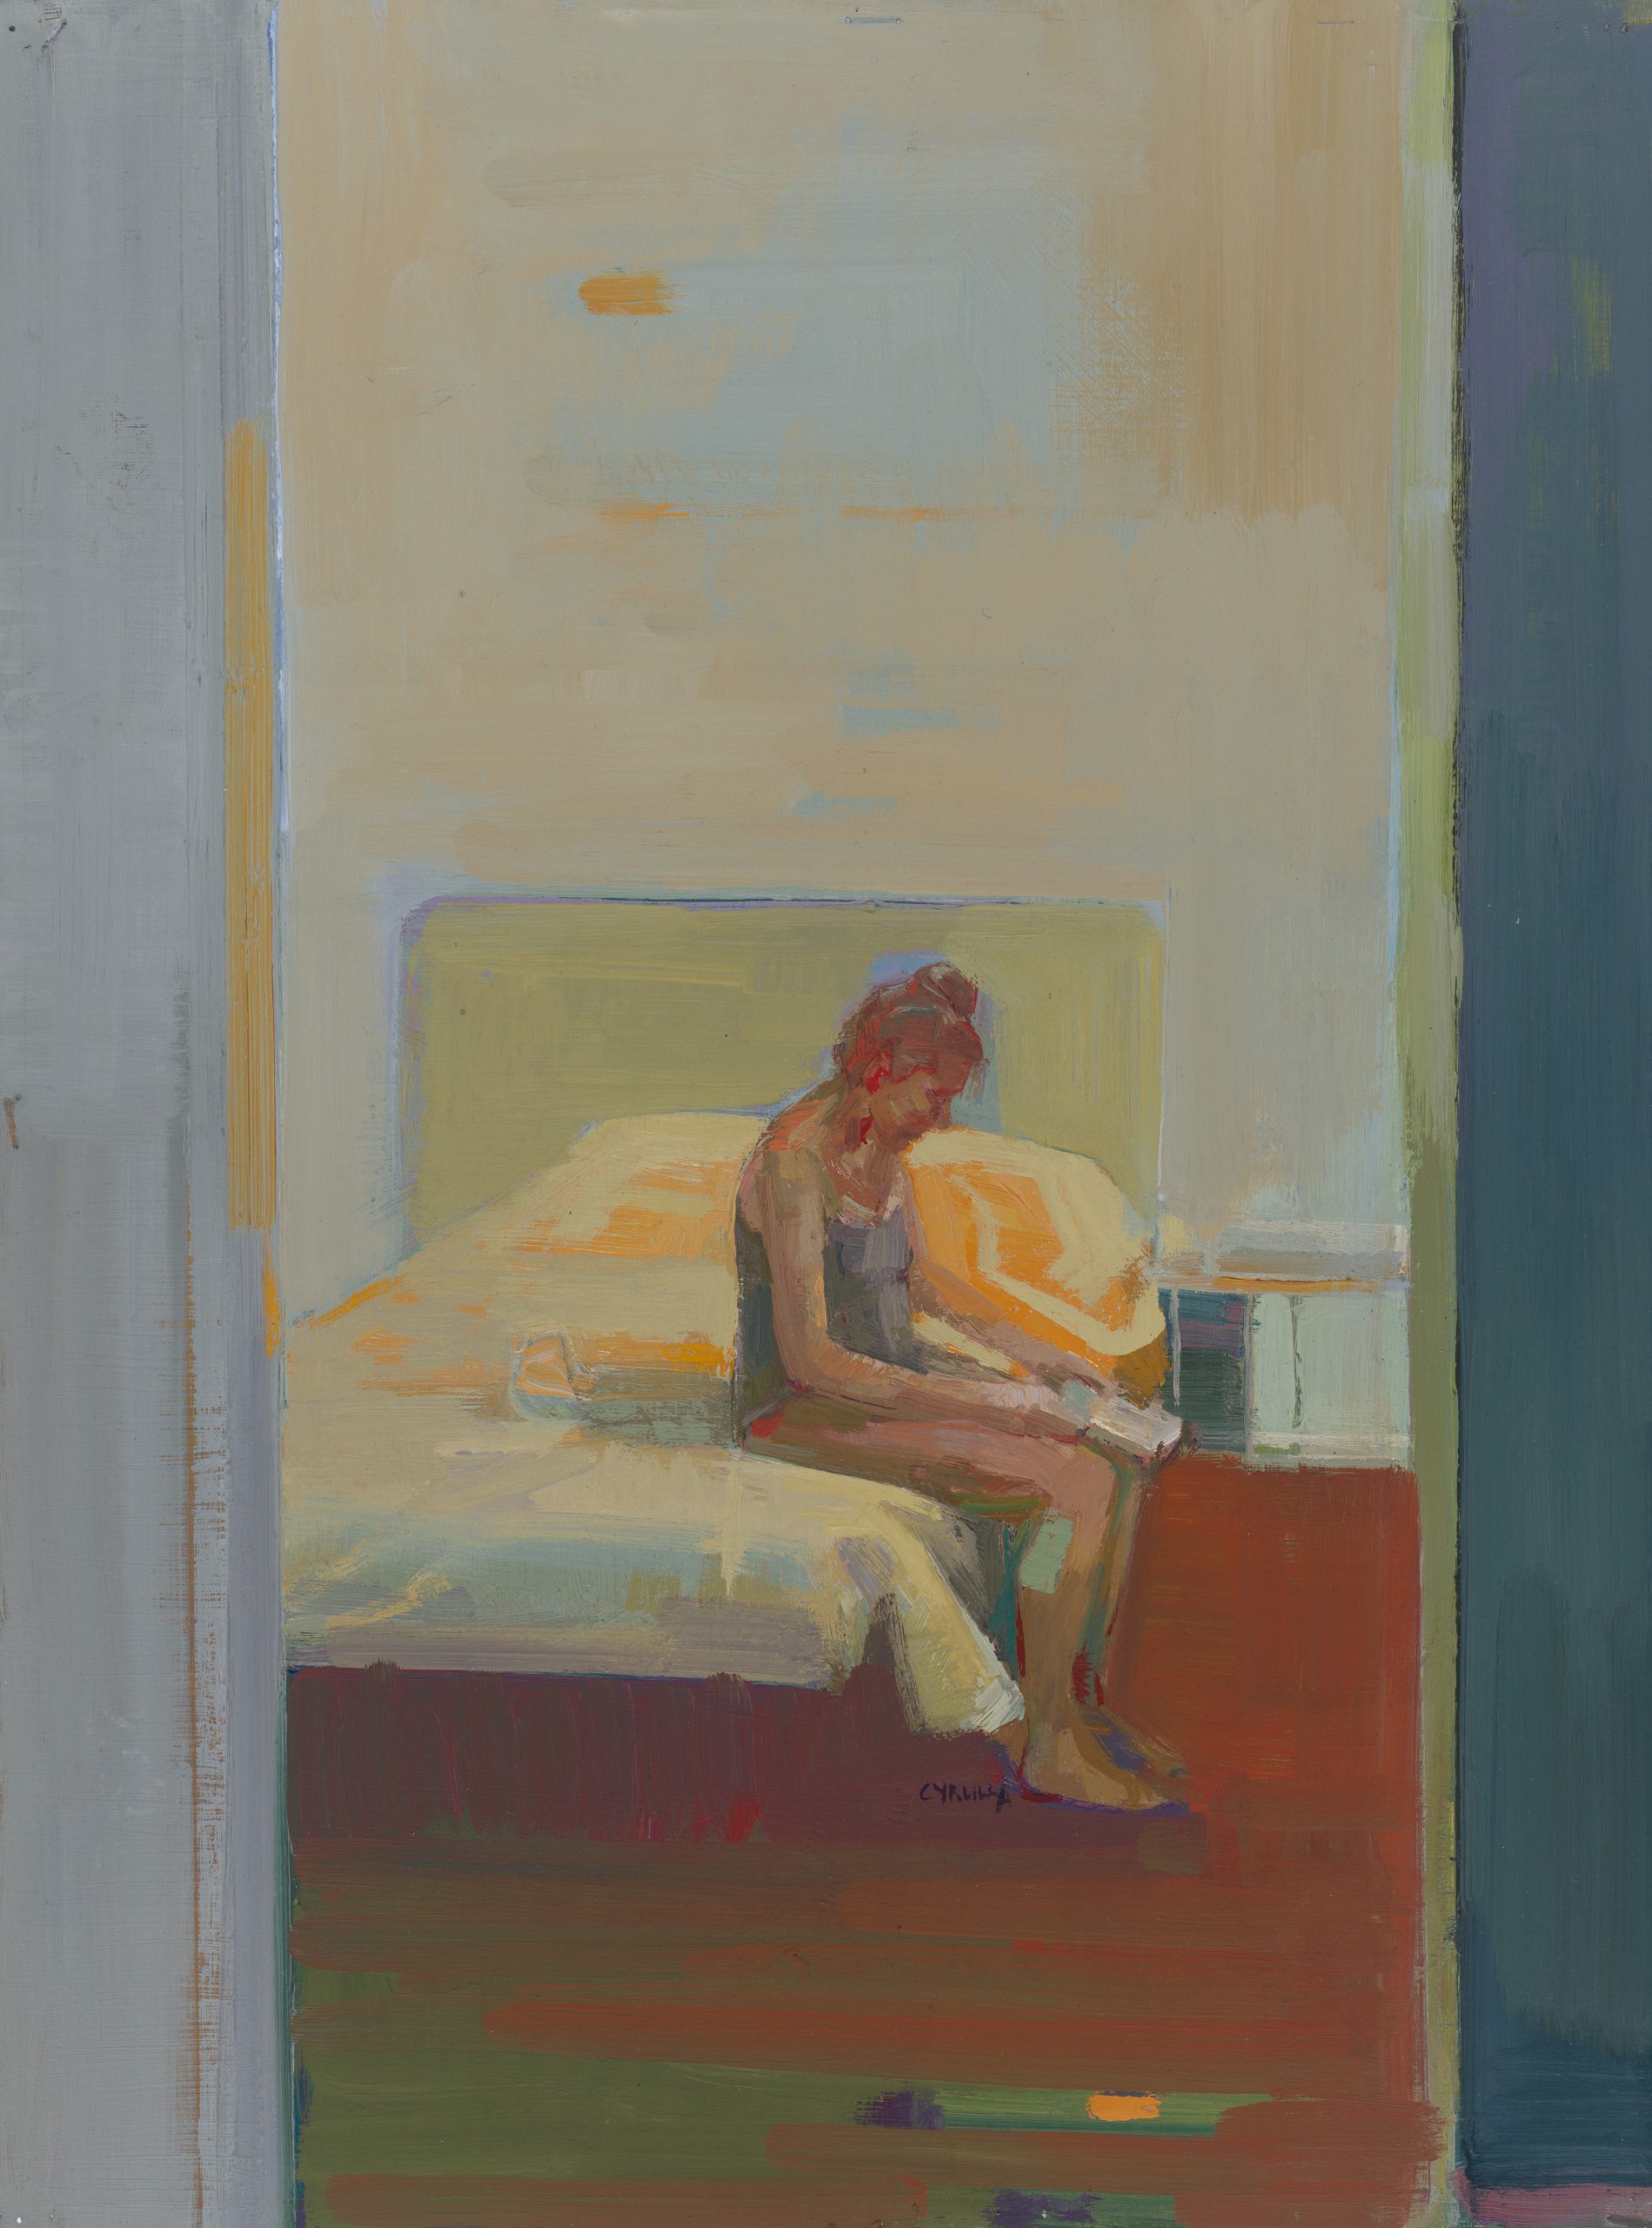 Dagmar Cyrulla 'After Hopper (study 2)' oil on paper on board 48 x 36cm $4,900